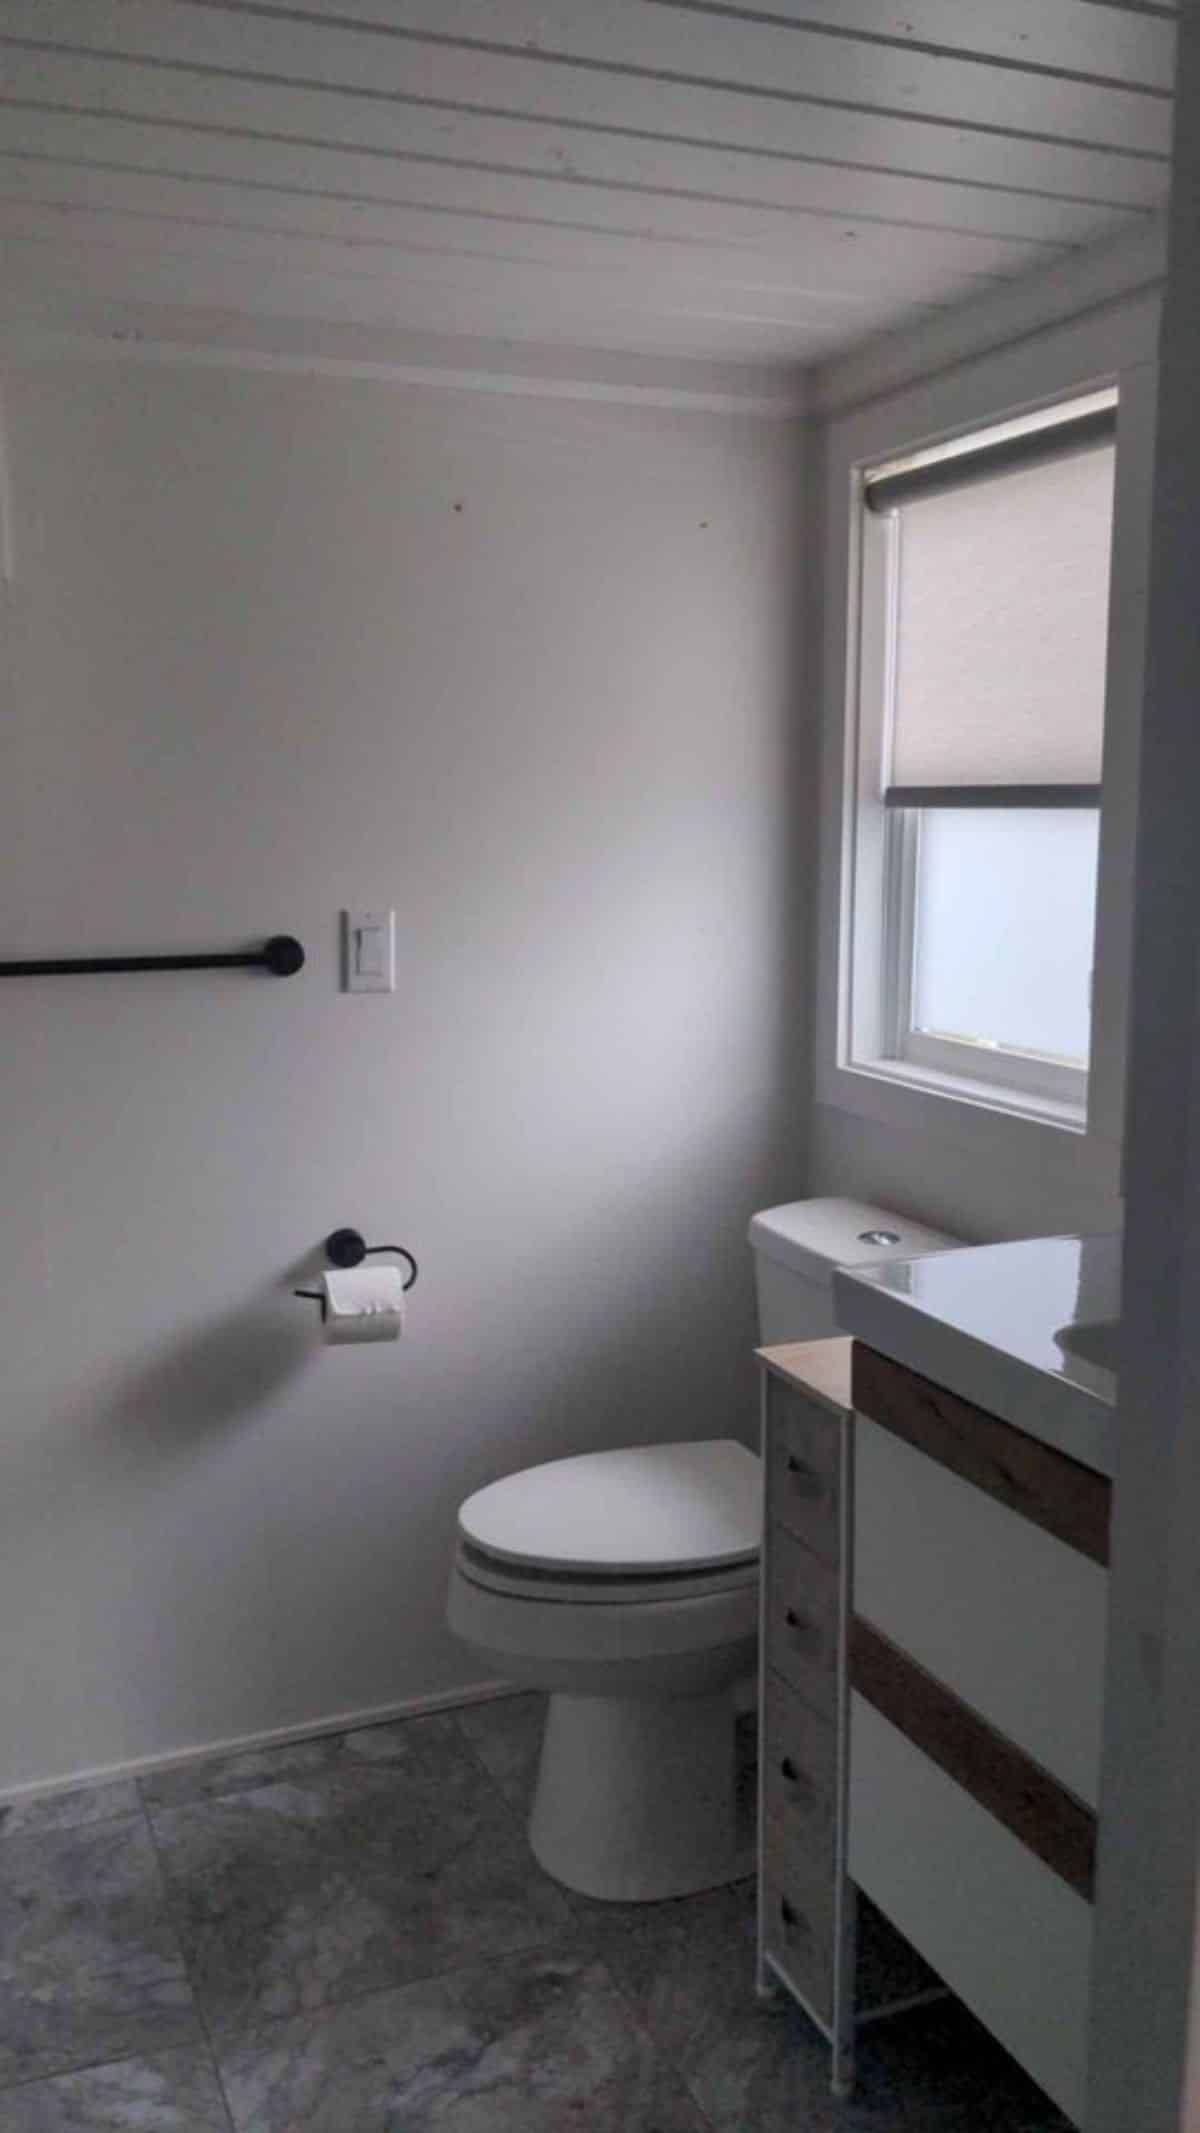 Standard toilet, sink with vanity and lots of storage